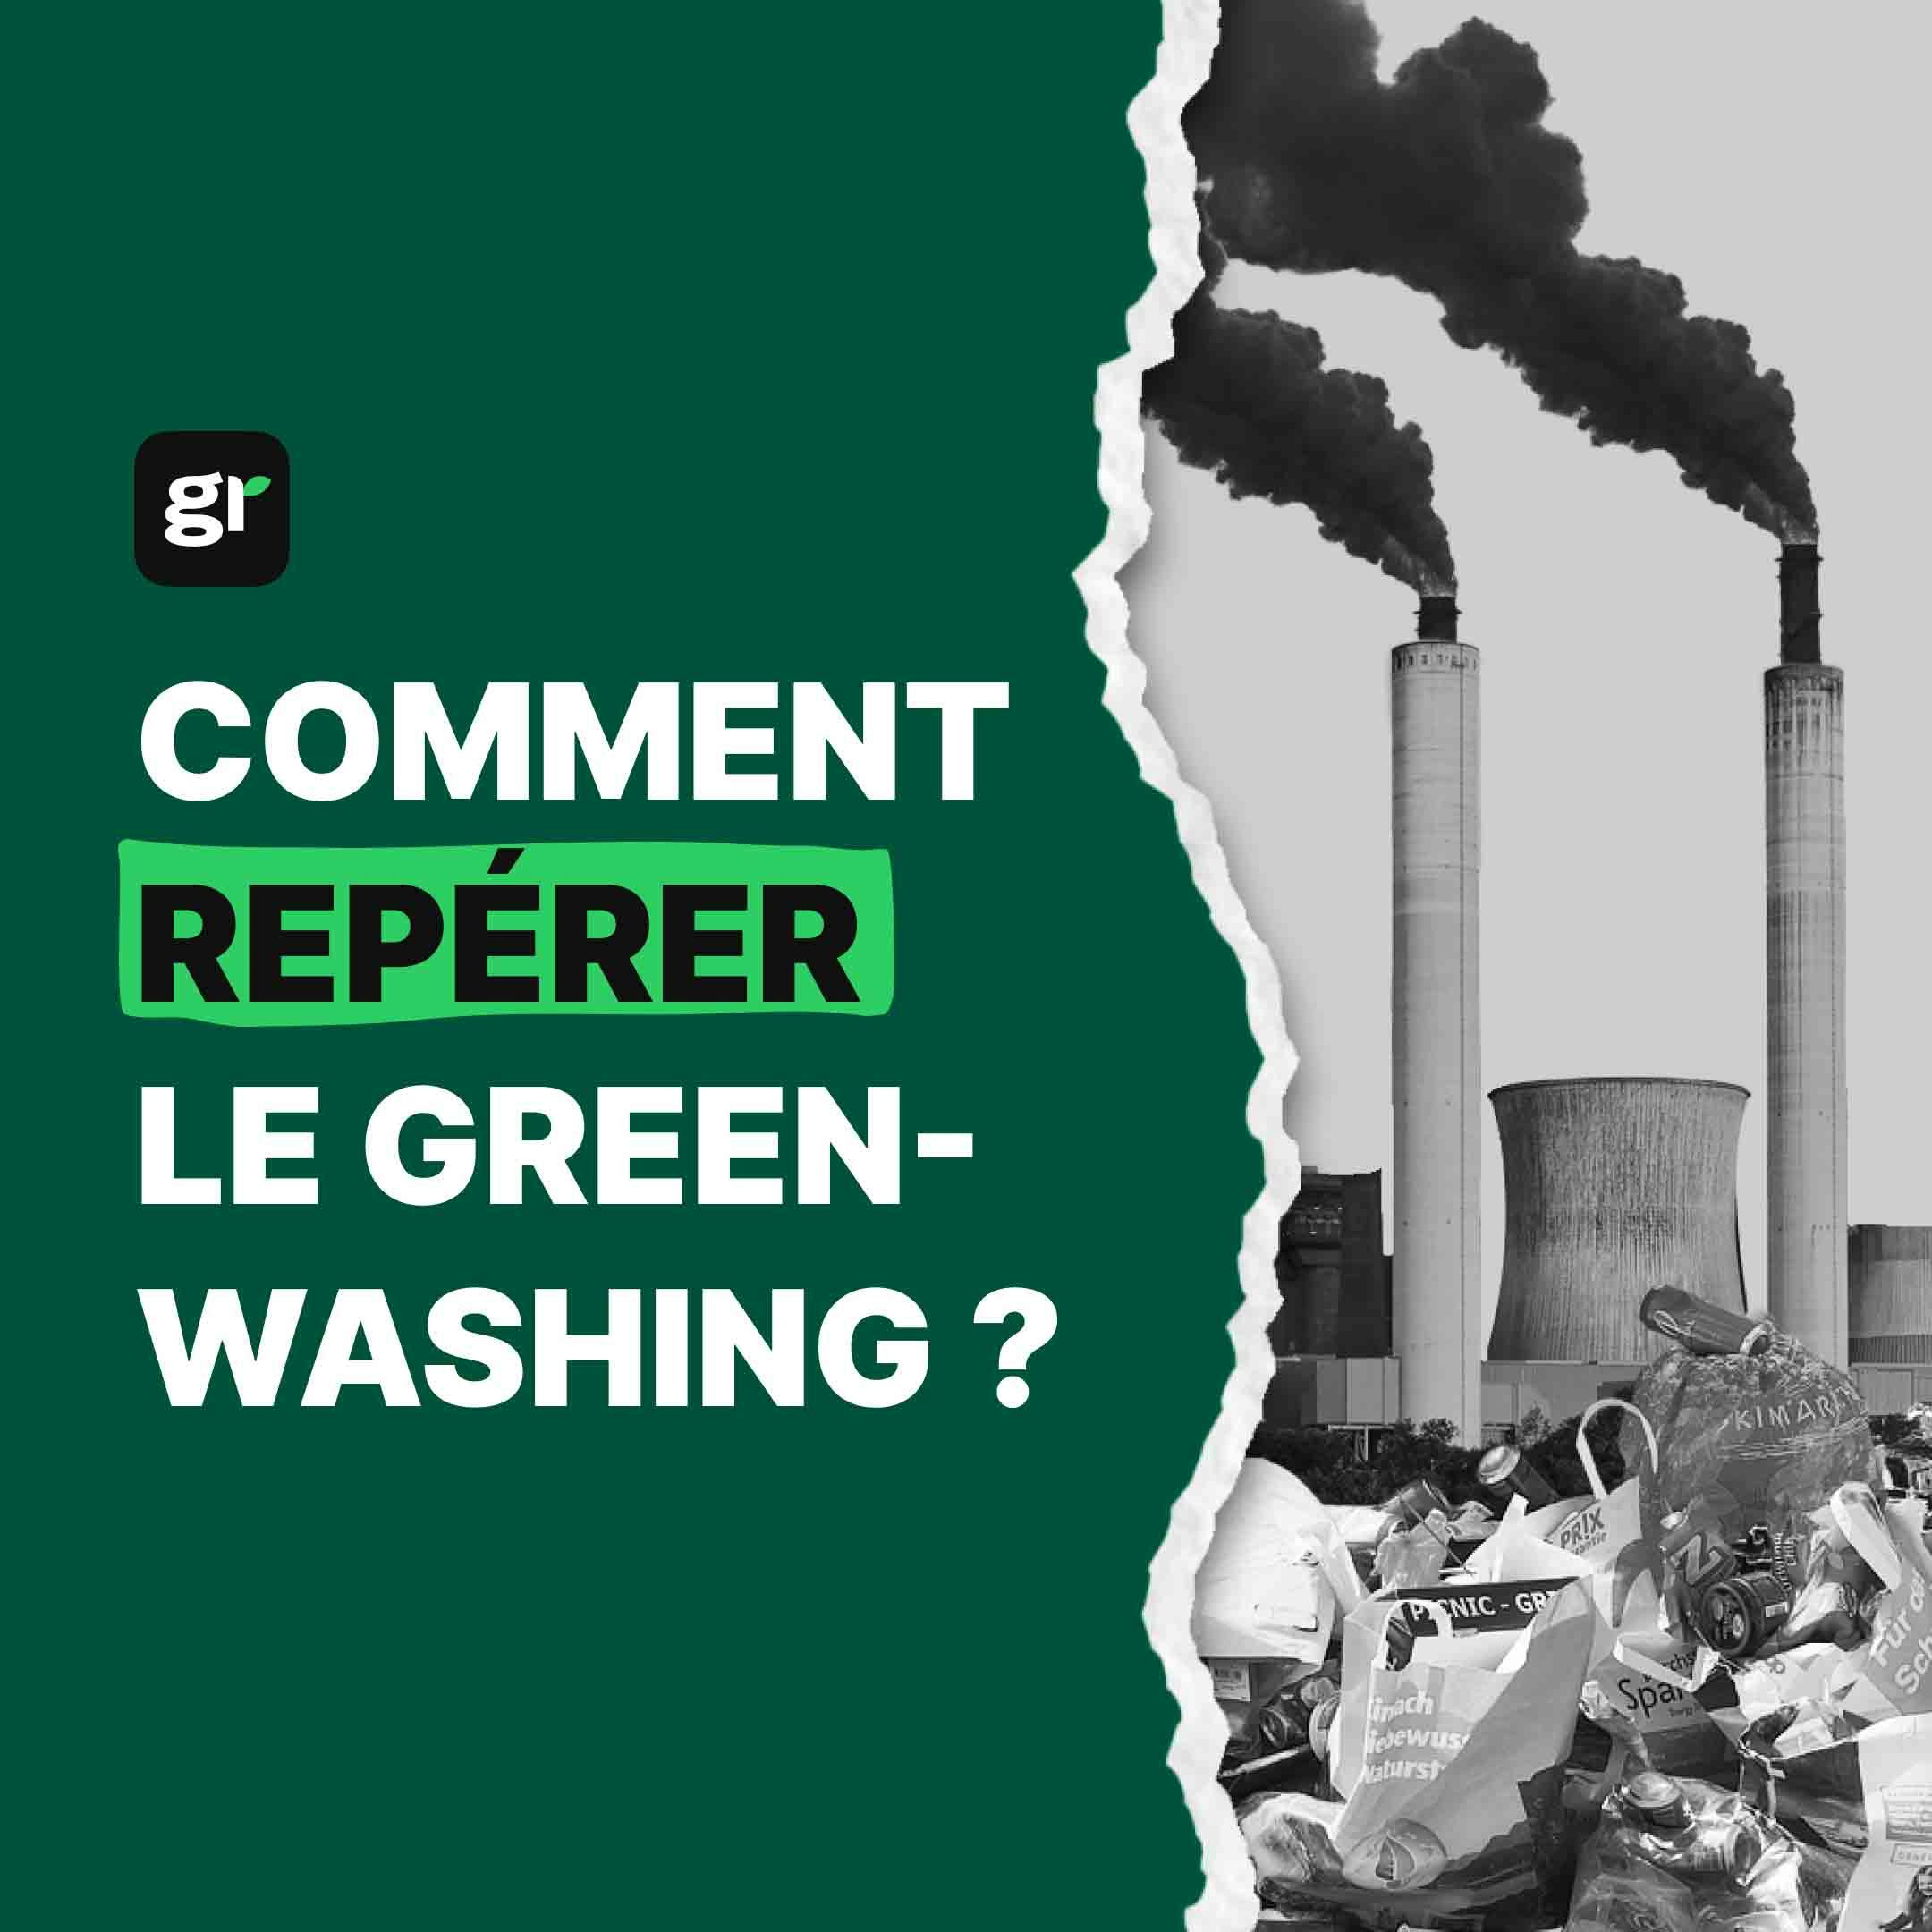 infographie comment repérer le greenwashing